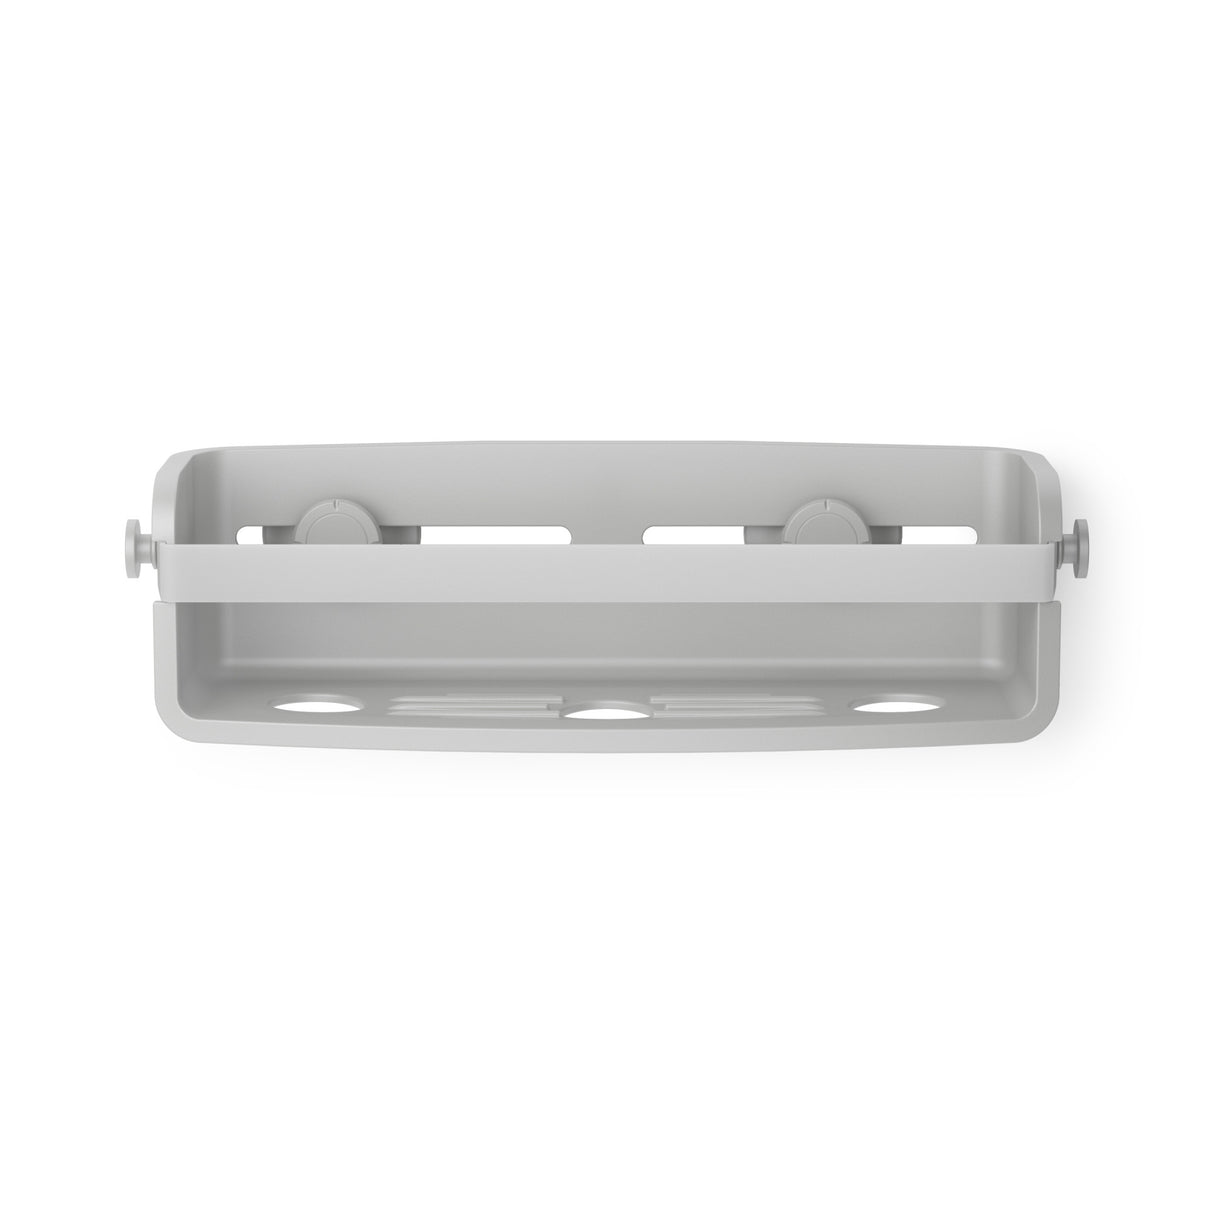 Flex Gel-Lock Wall mounted soap dish - Umbra 1004433-660